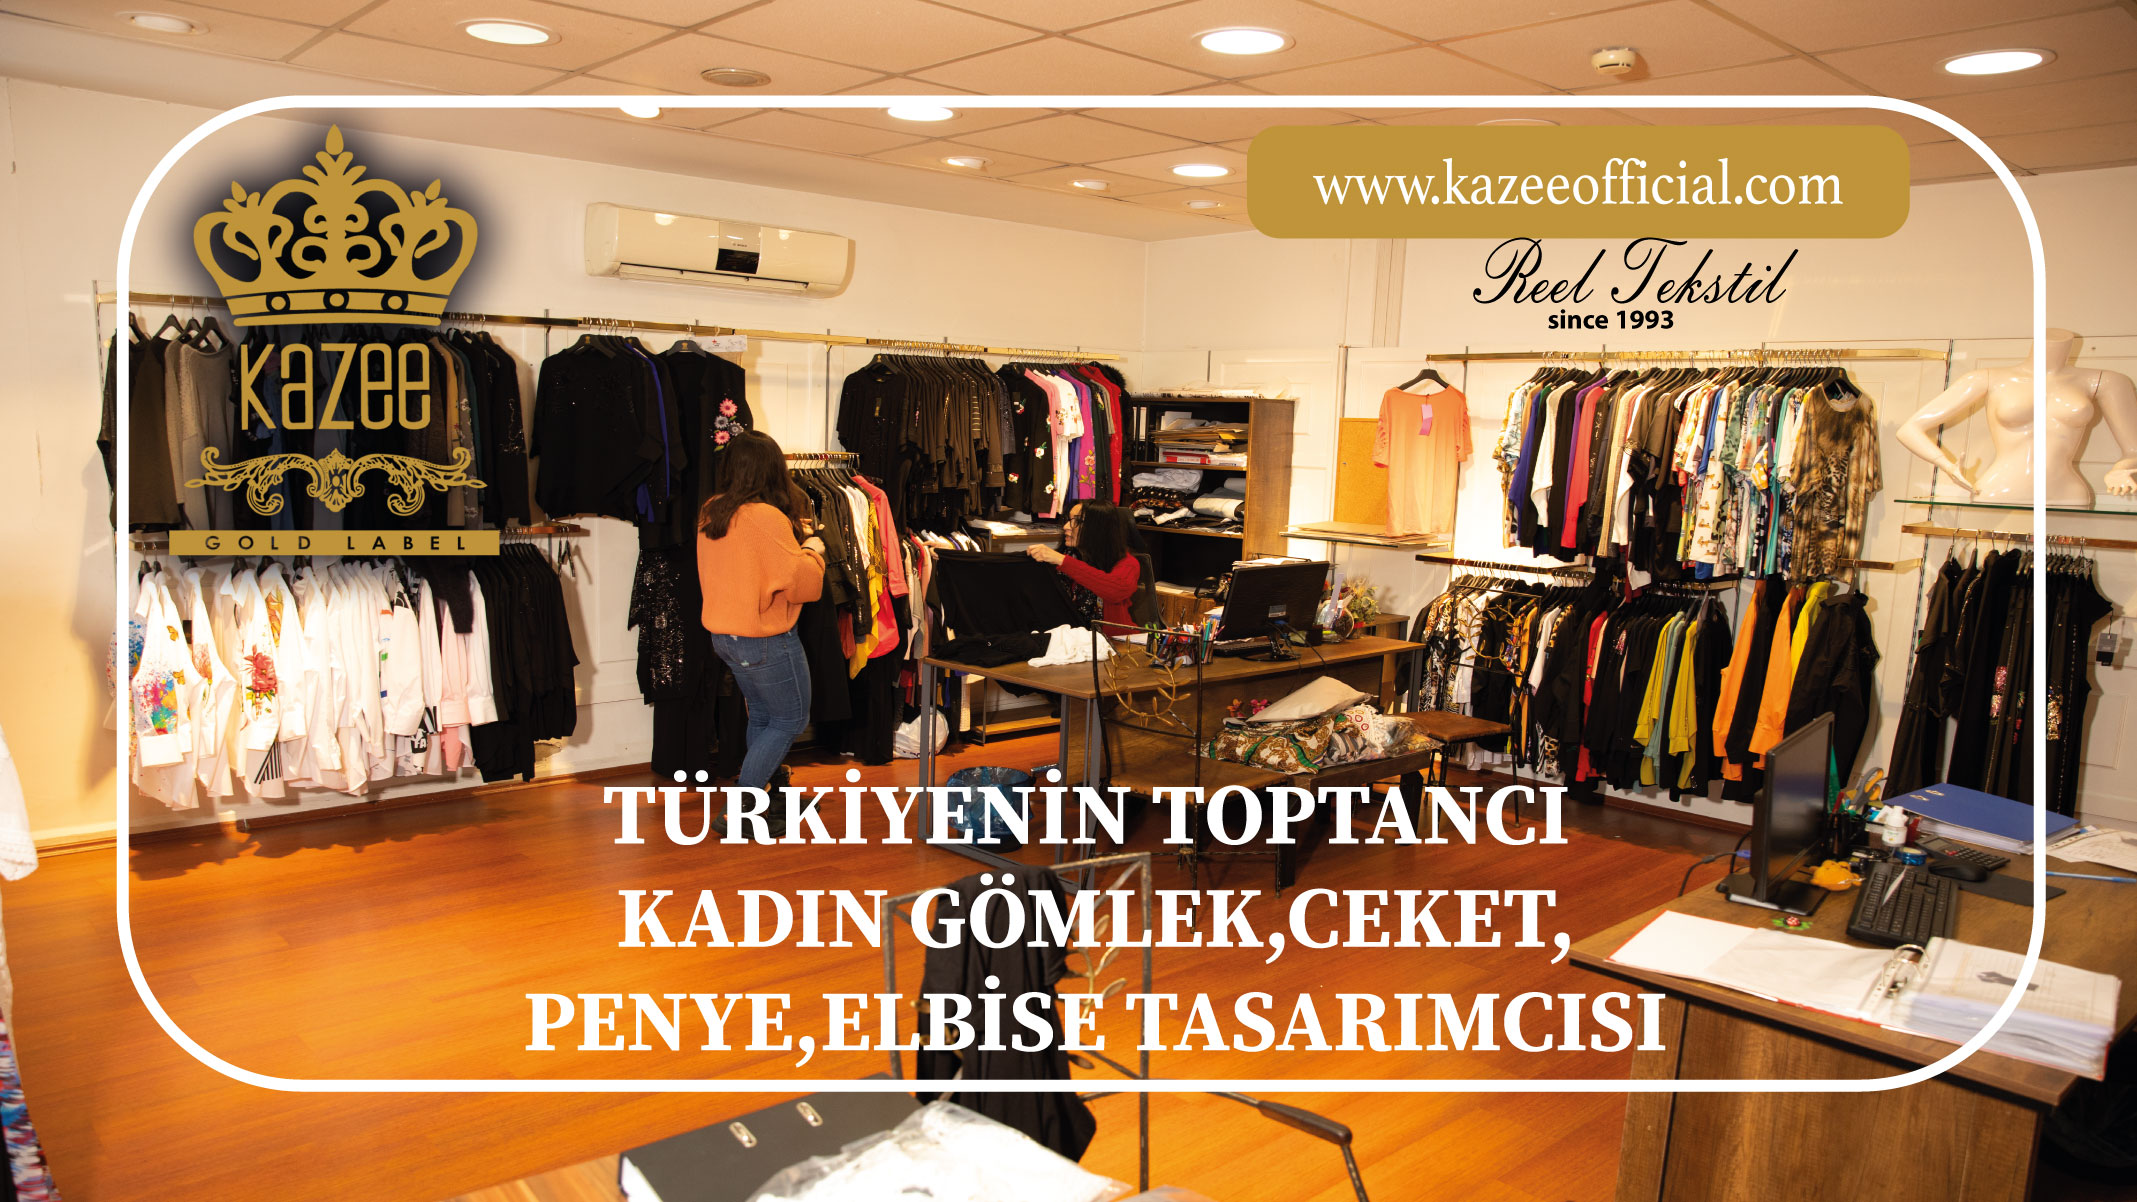 TURKEY'S WHOLESALE WOMEN'S SHIRT, JACKET, COMBED, DRESS DESIGNER